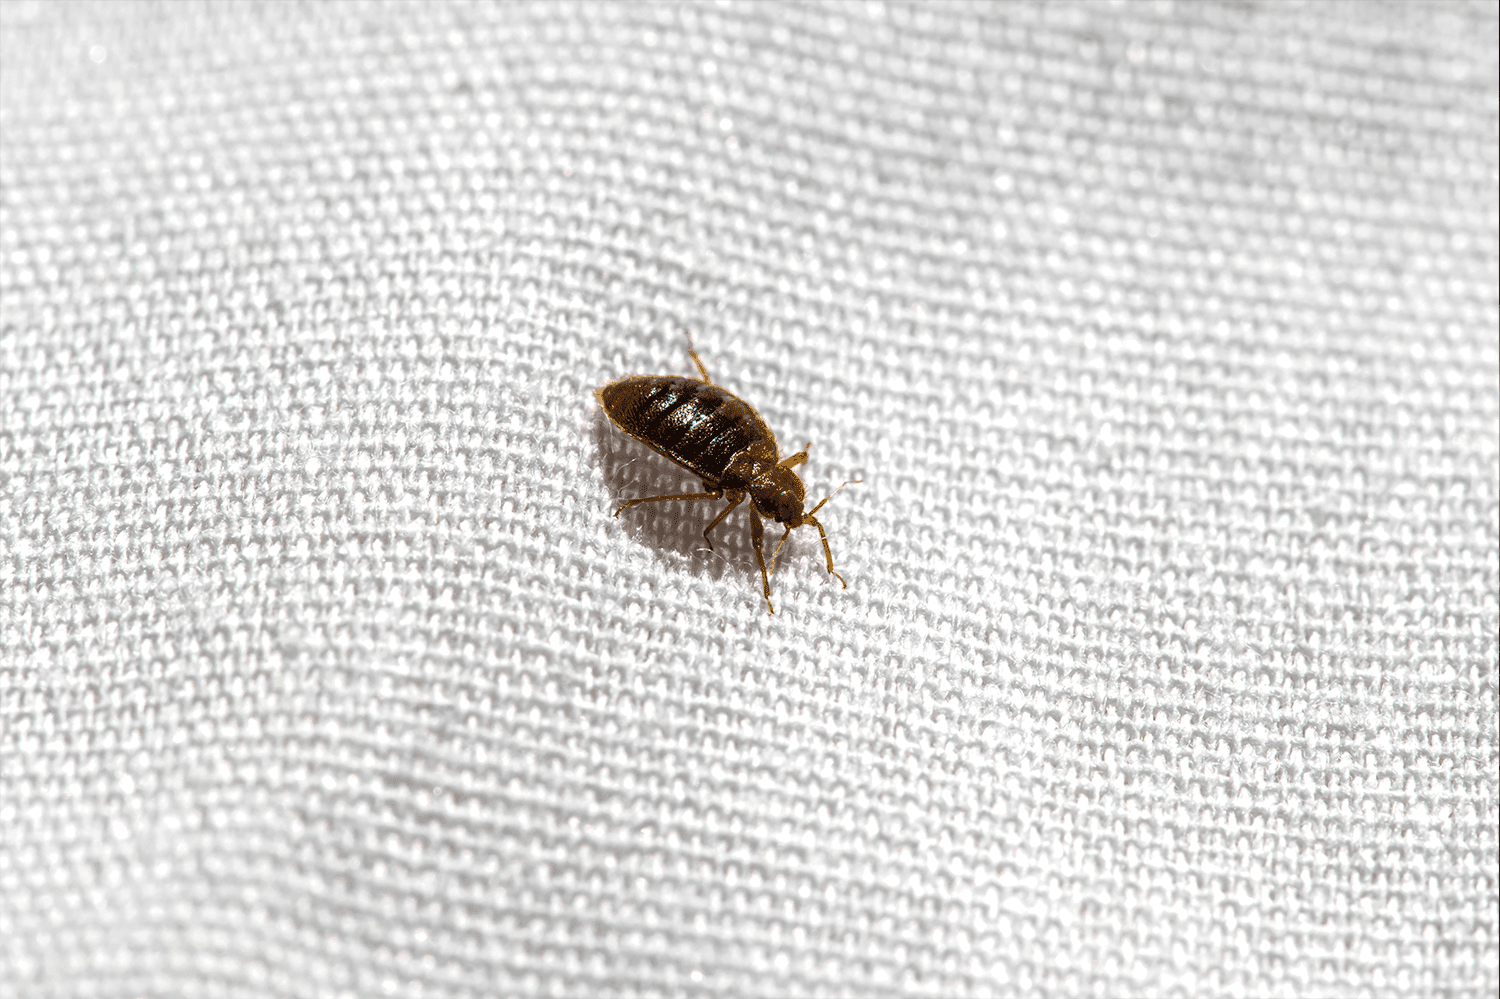 Bed Bug 